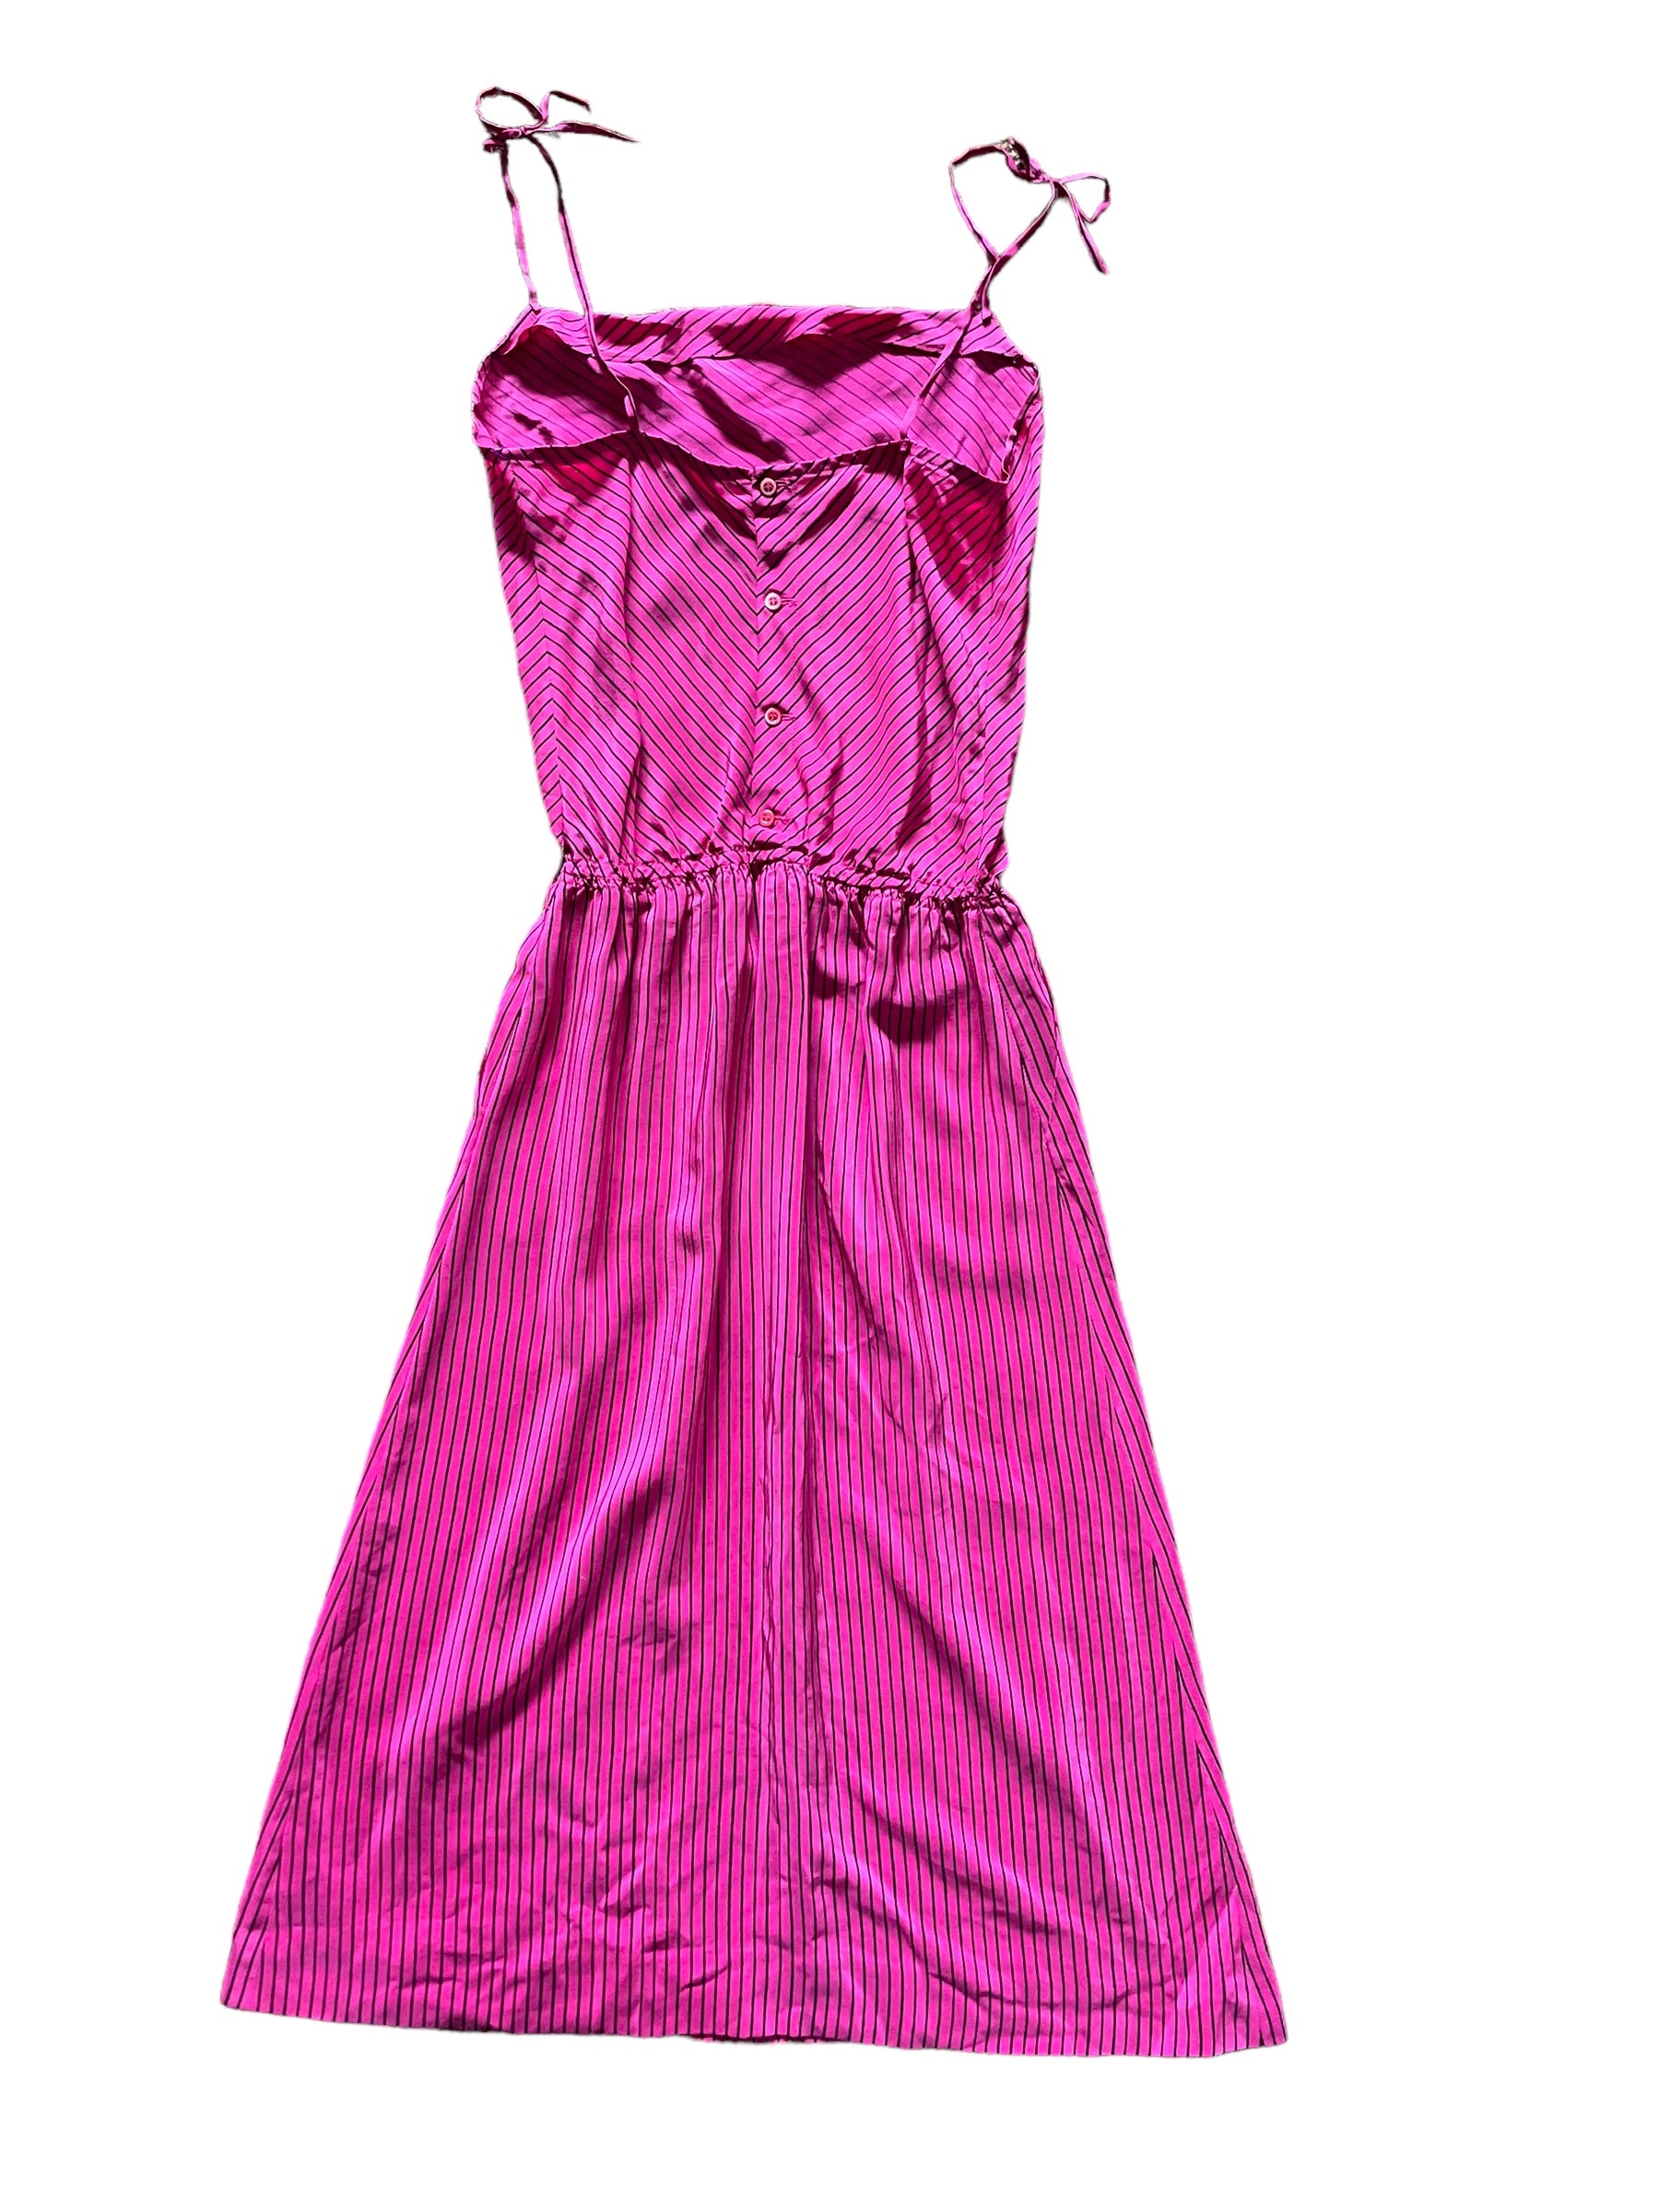 Full back view of Vintage 1980s Pink Dress w/ Black Stripes SZ XS  |  Barn Owl Vintage Dresses | Seattle Vintage Ladies Clothing